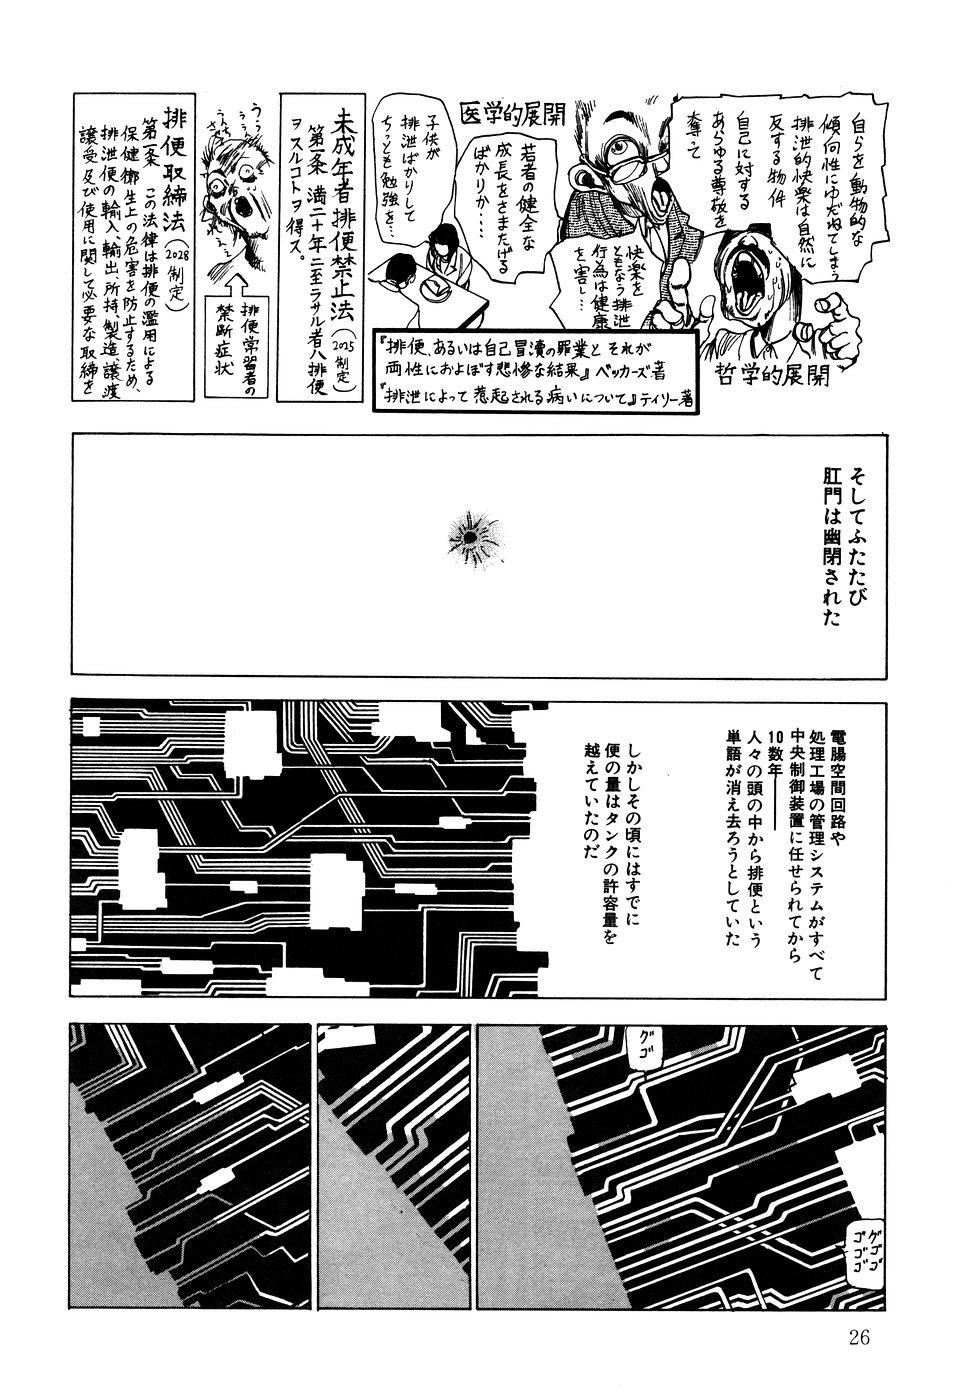 [Shintaro Kago] Dekoboko Nymphomania (1995) [駕籠真太郎] 凸凹ニンフォマニア